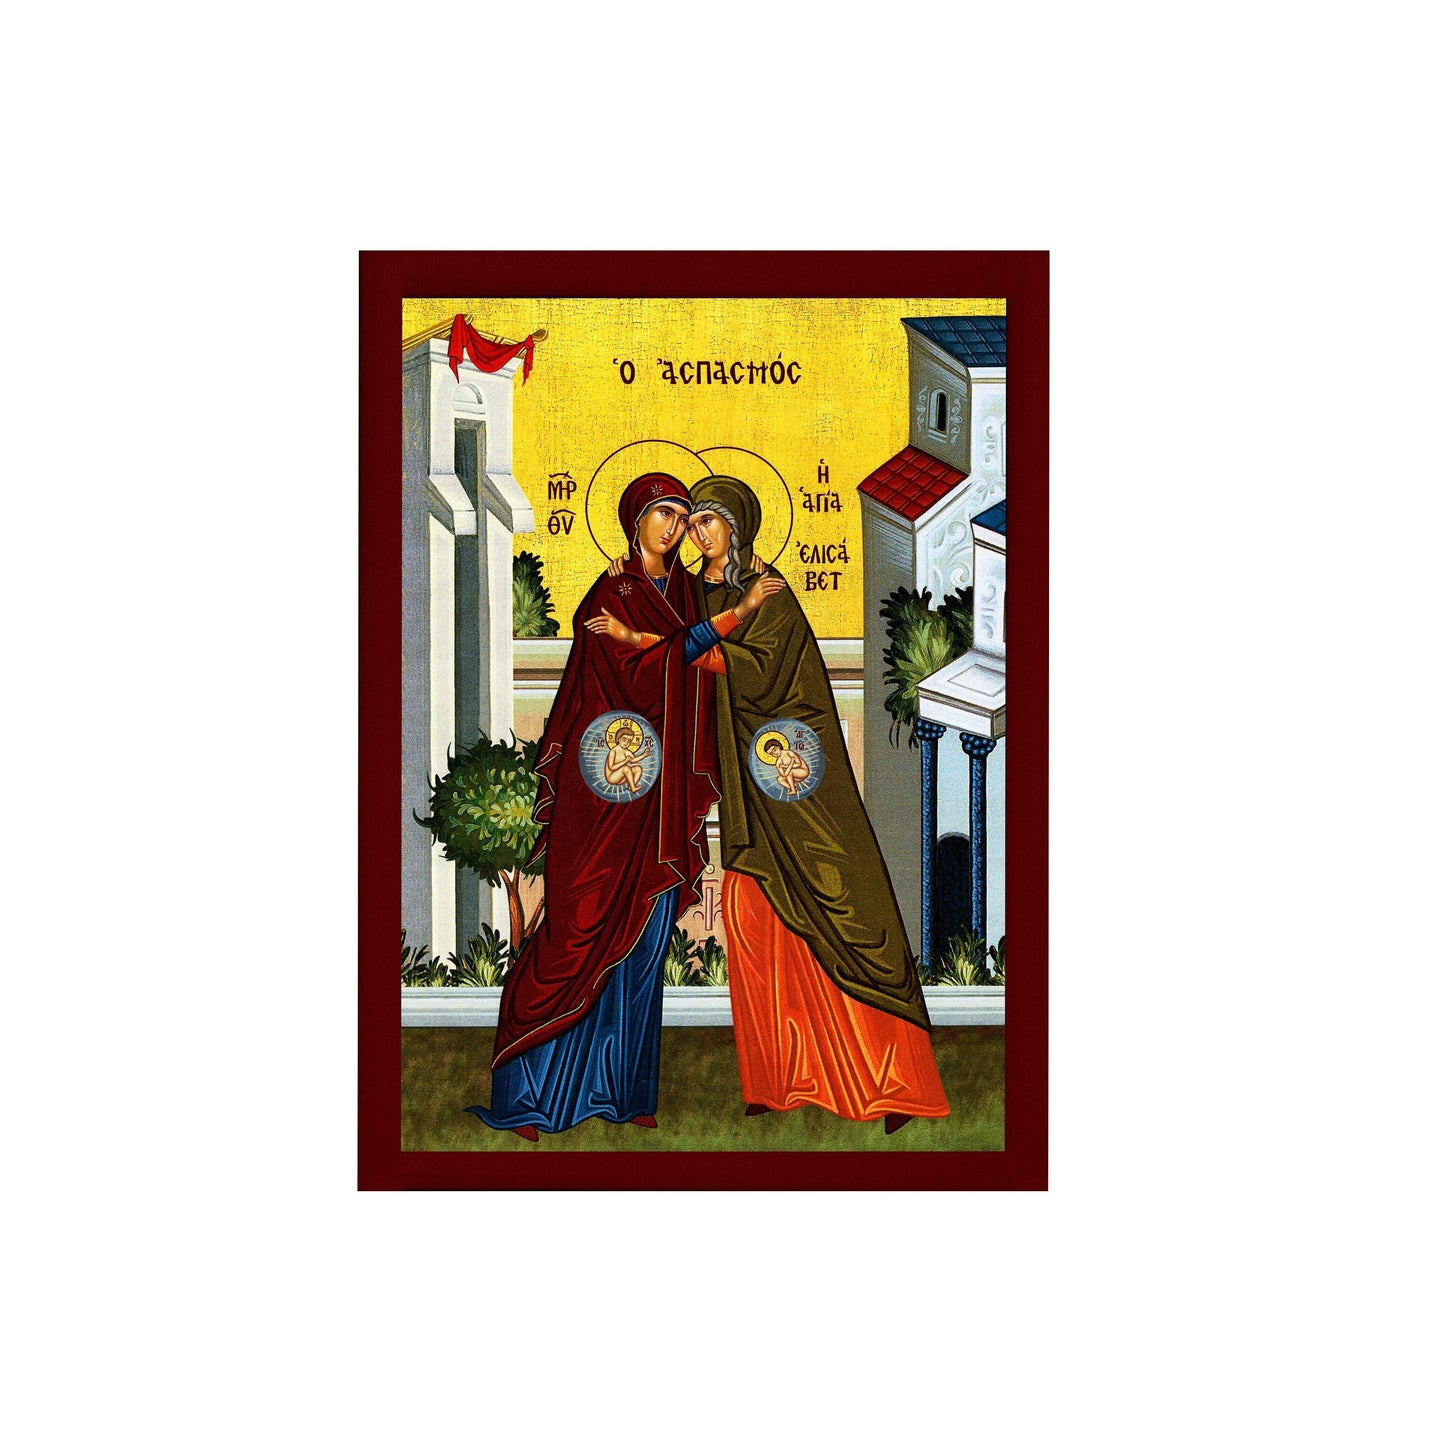 The Visitation of Theotokos to Elizabeth, Handmade Greek Orthodox icon of Virgin Mary, Byzantine wood plaque TheHolyArt